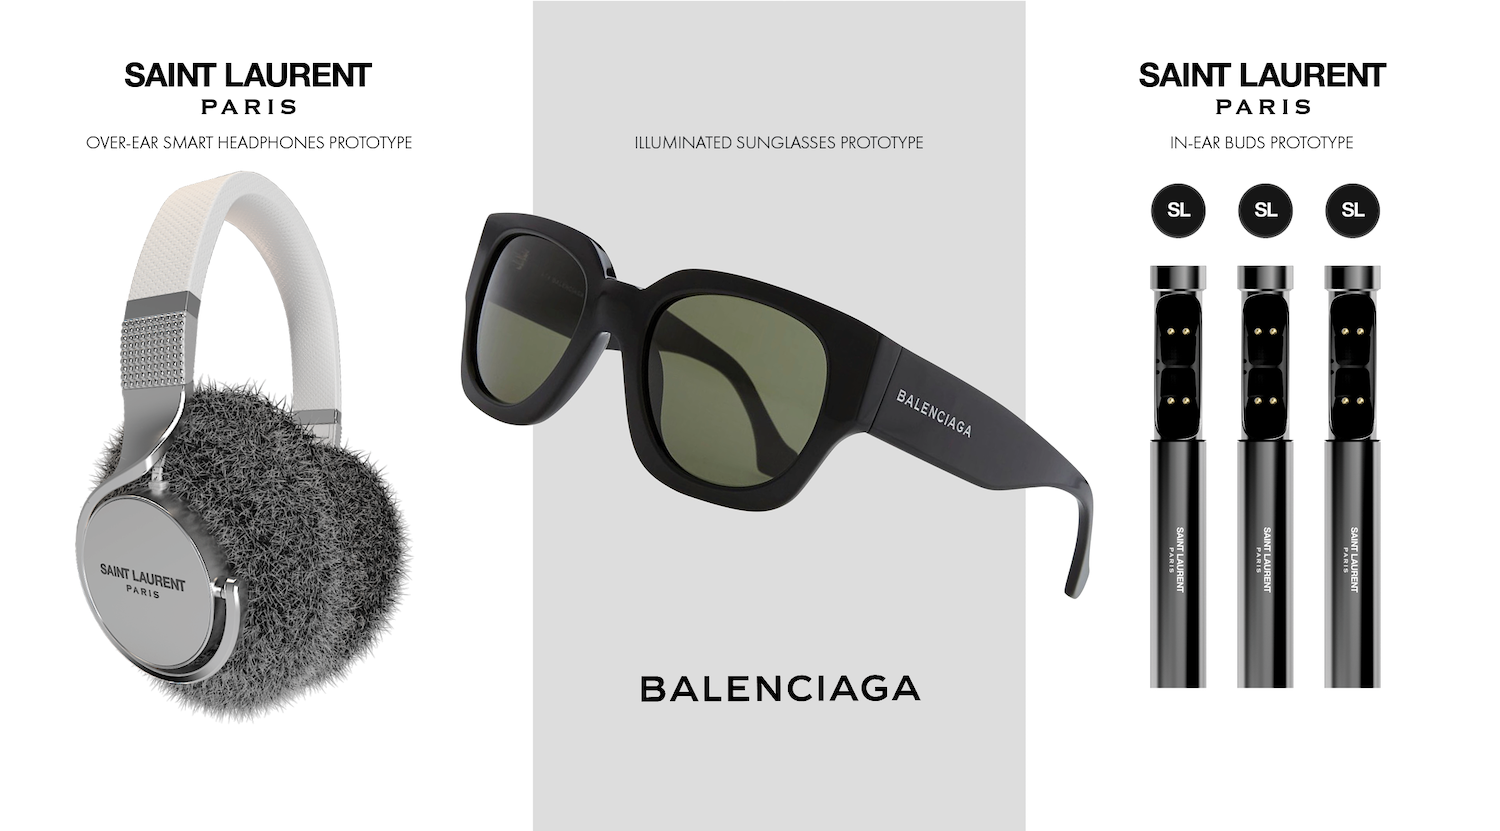 muzik connect kering group smarphone smart glasses and in-ear prototypes saint laurent and balenciaga